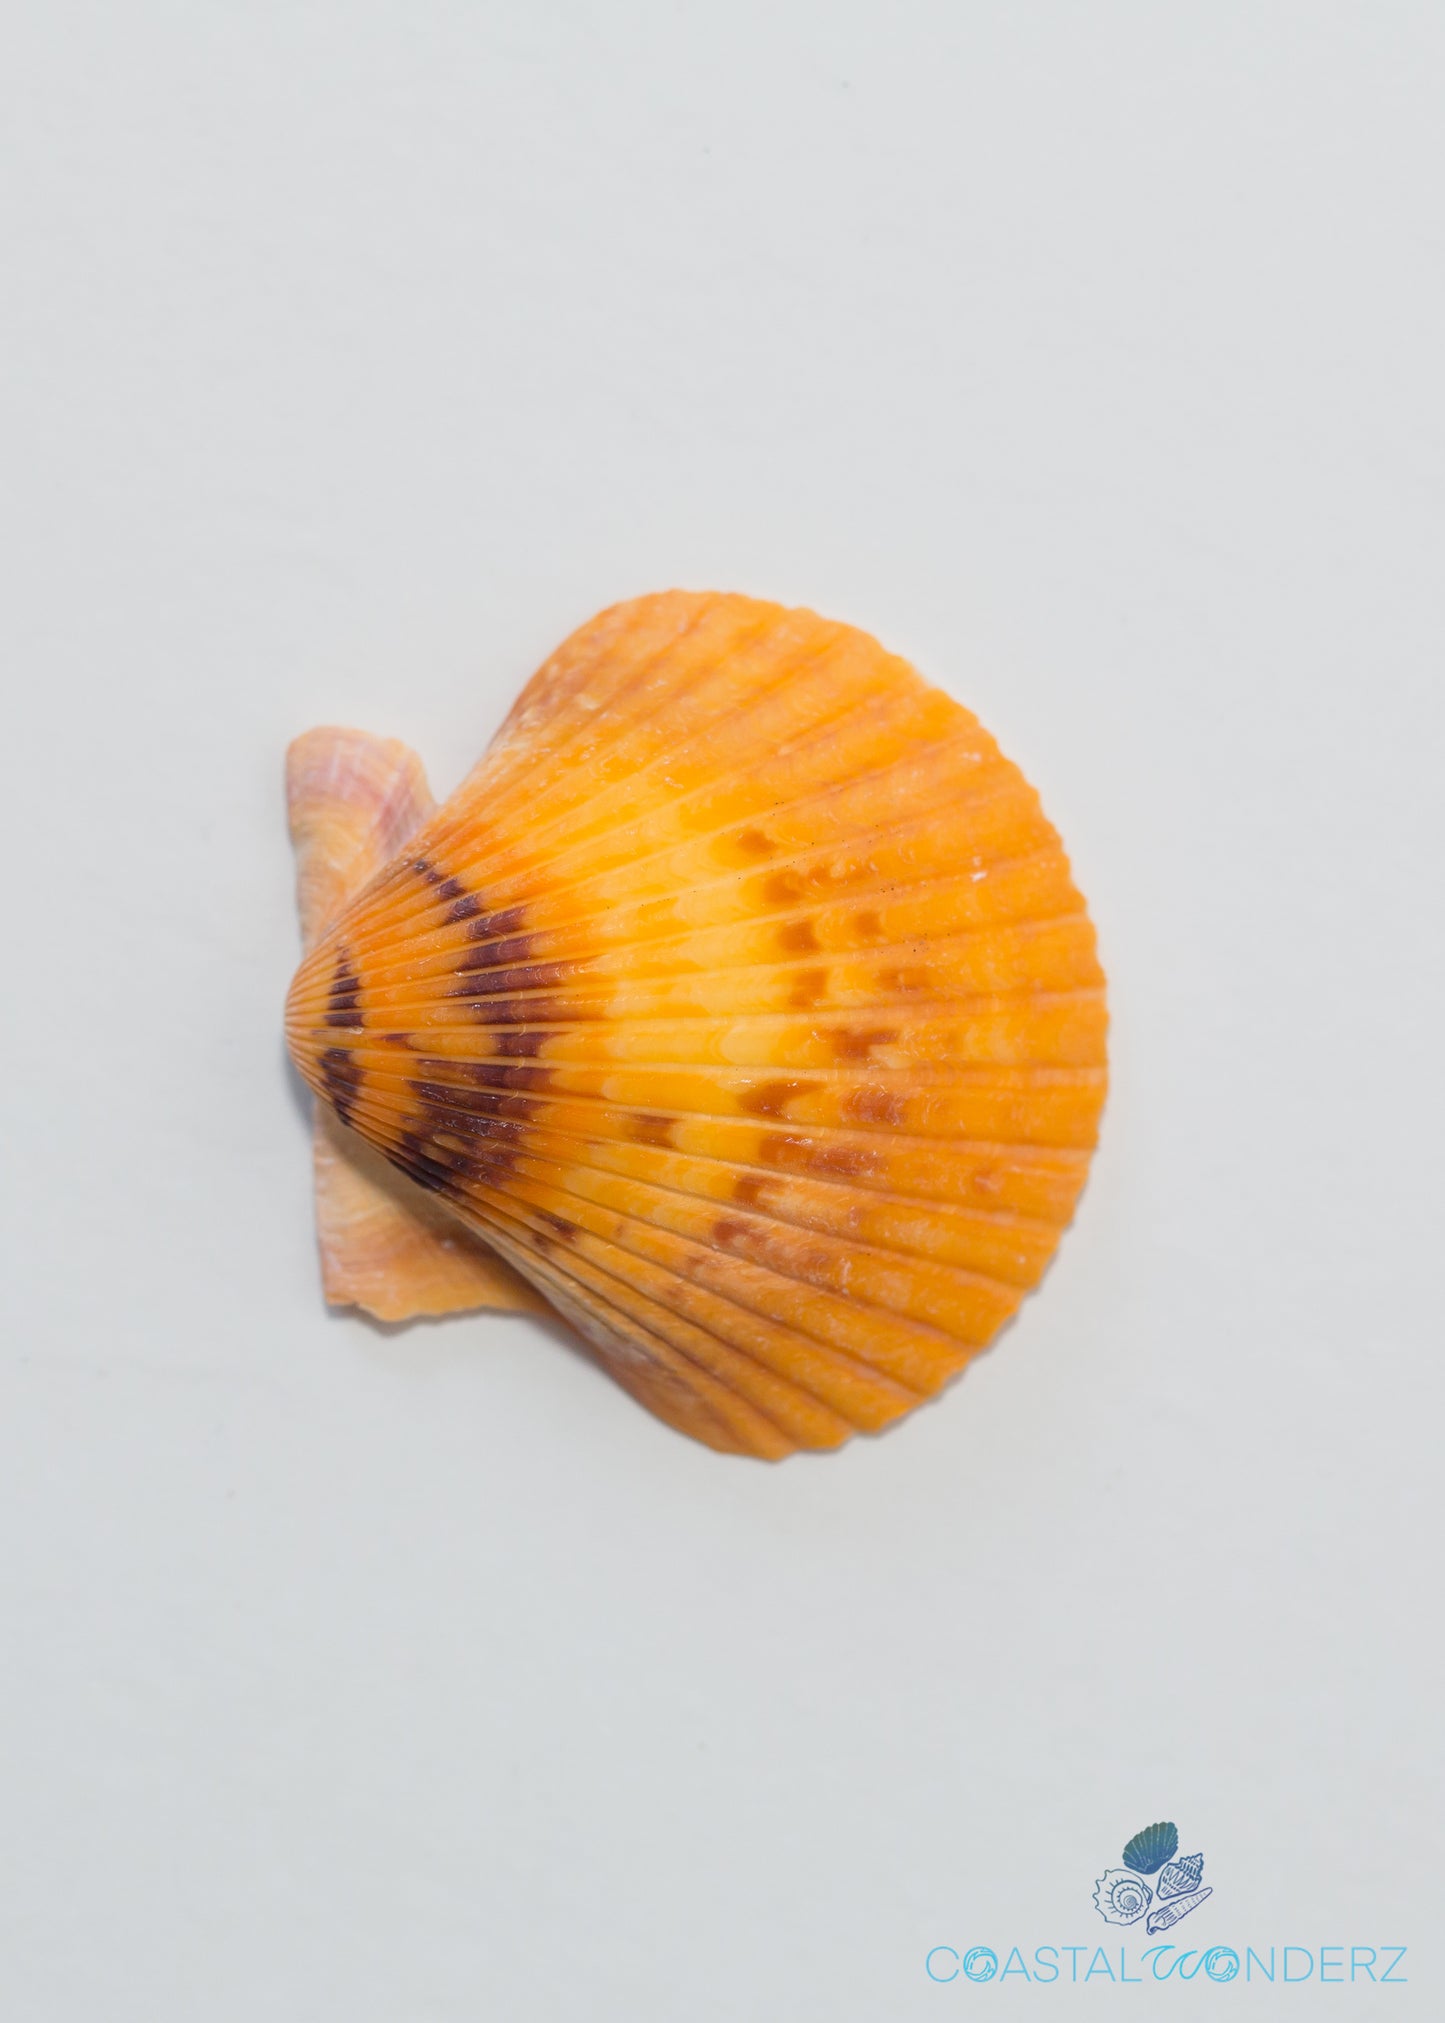 Orange Scallop or Calico Pecten Shell (Argopecten Gibbus)